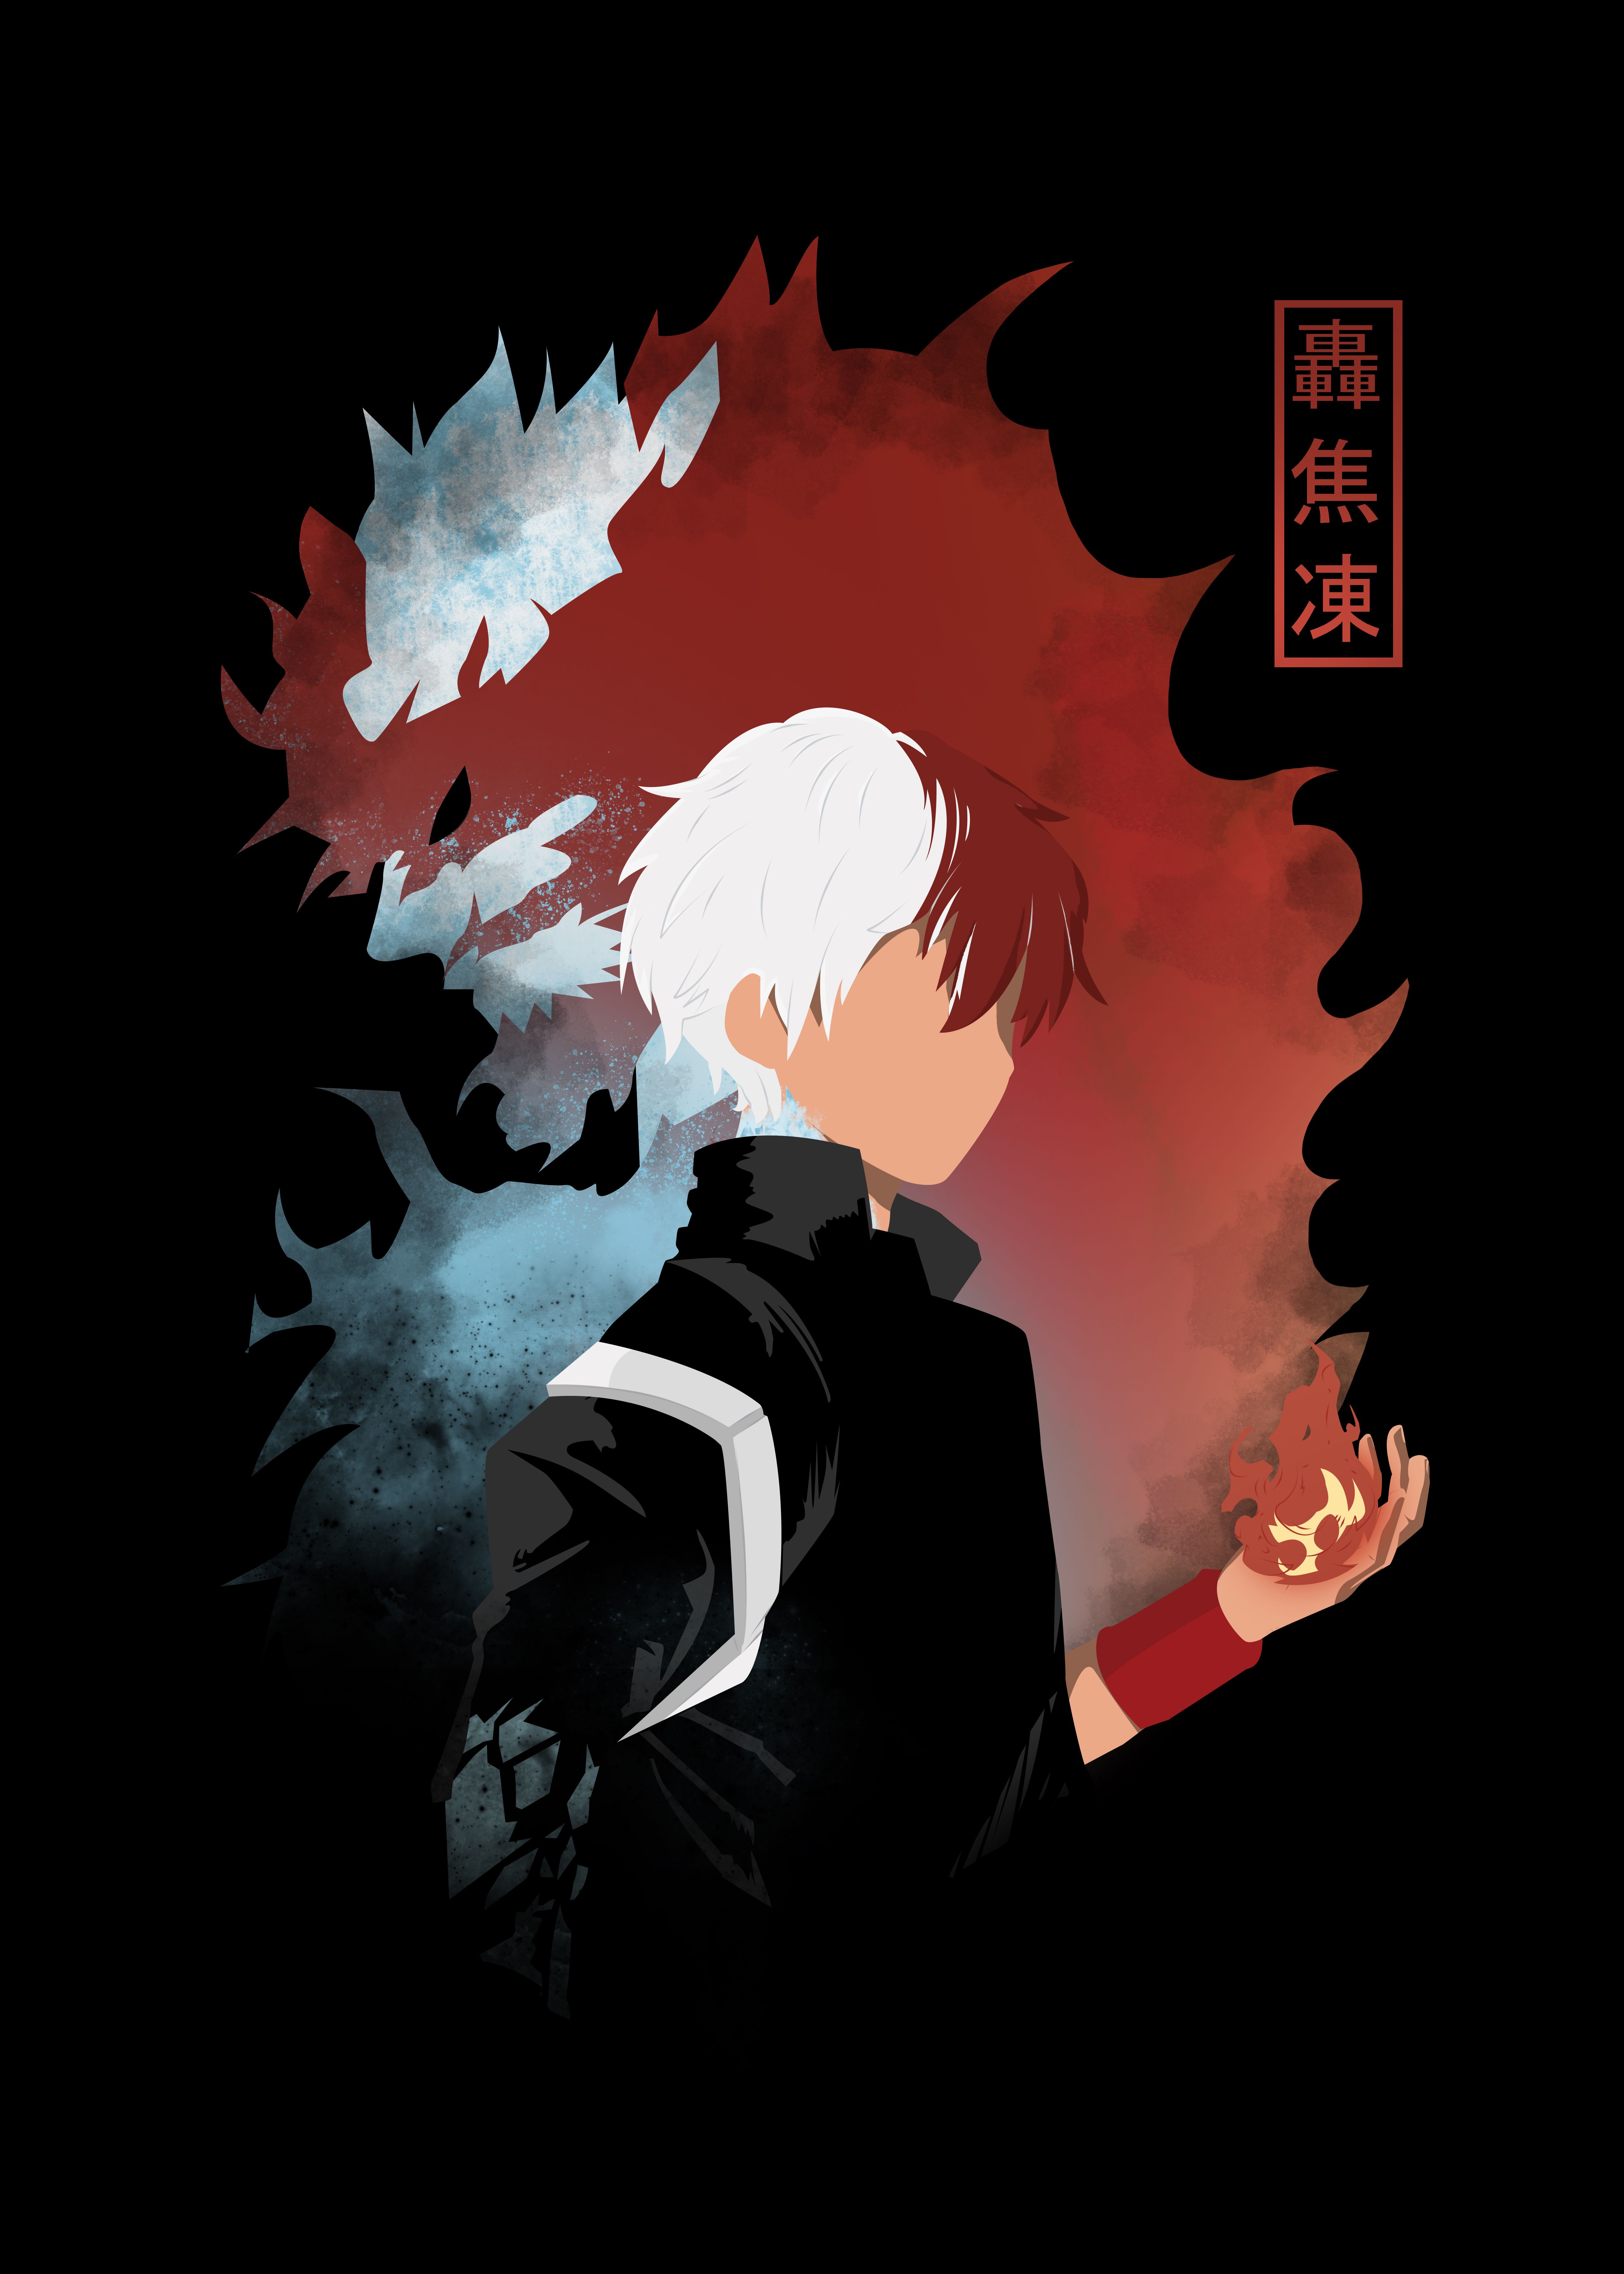 Ice And Fire' Metal Poster. Displate. Hero wallpaper, Aesthetic anime, My hero academia manga